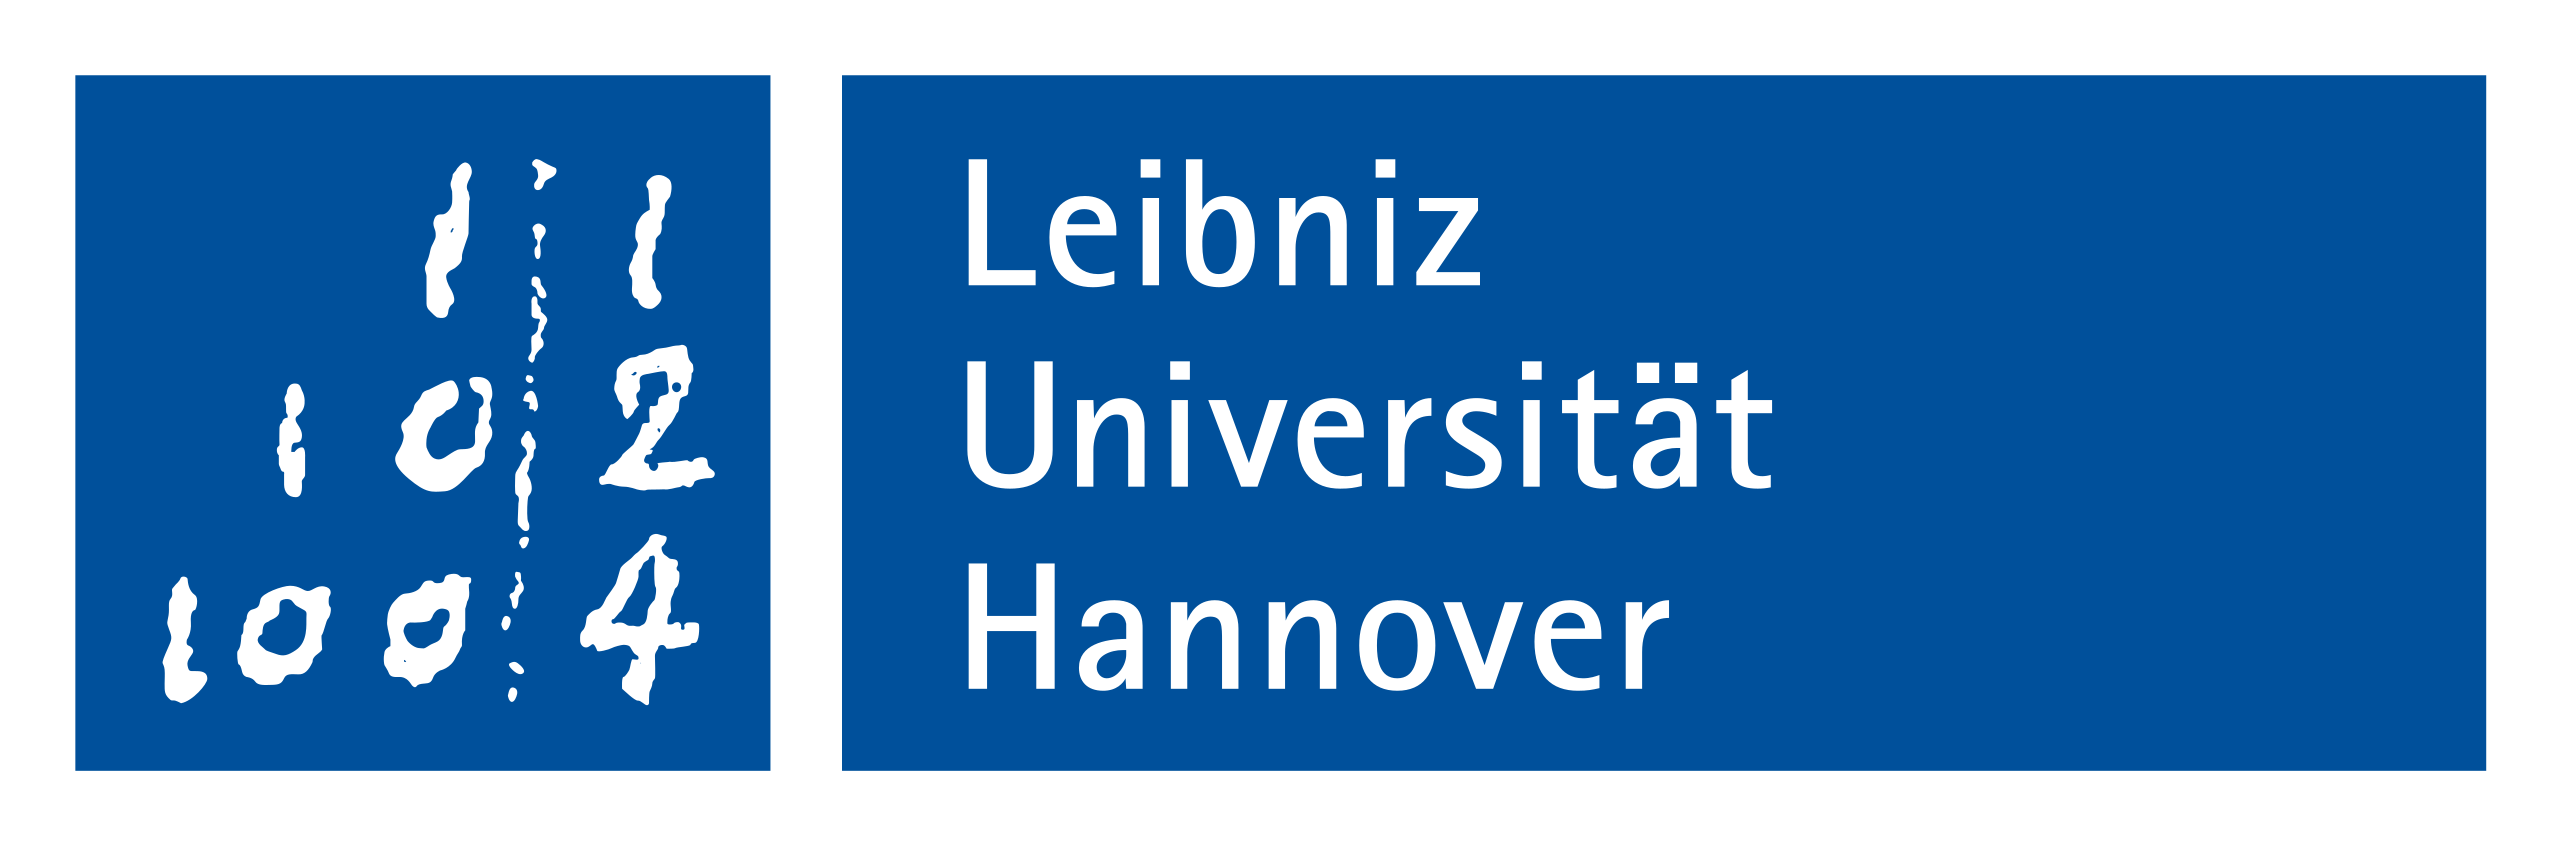 Leibniz University Hannover 